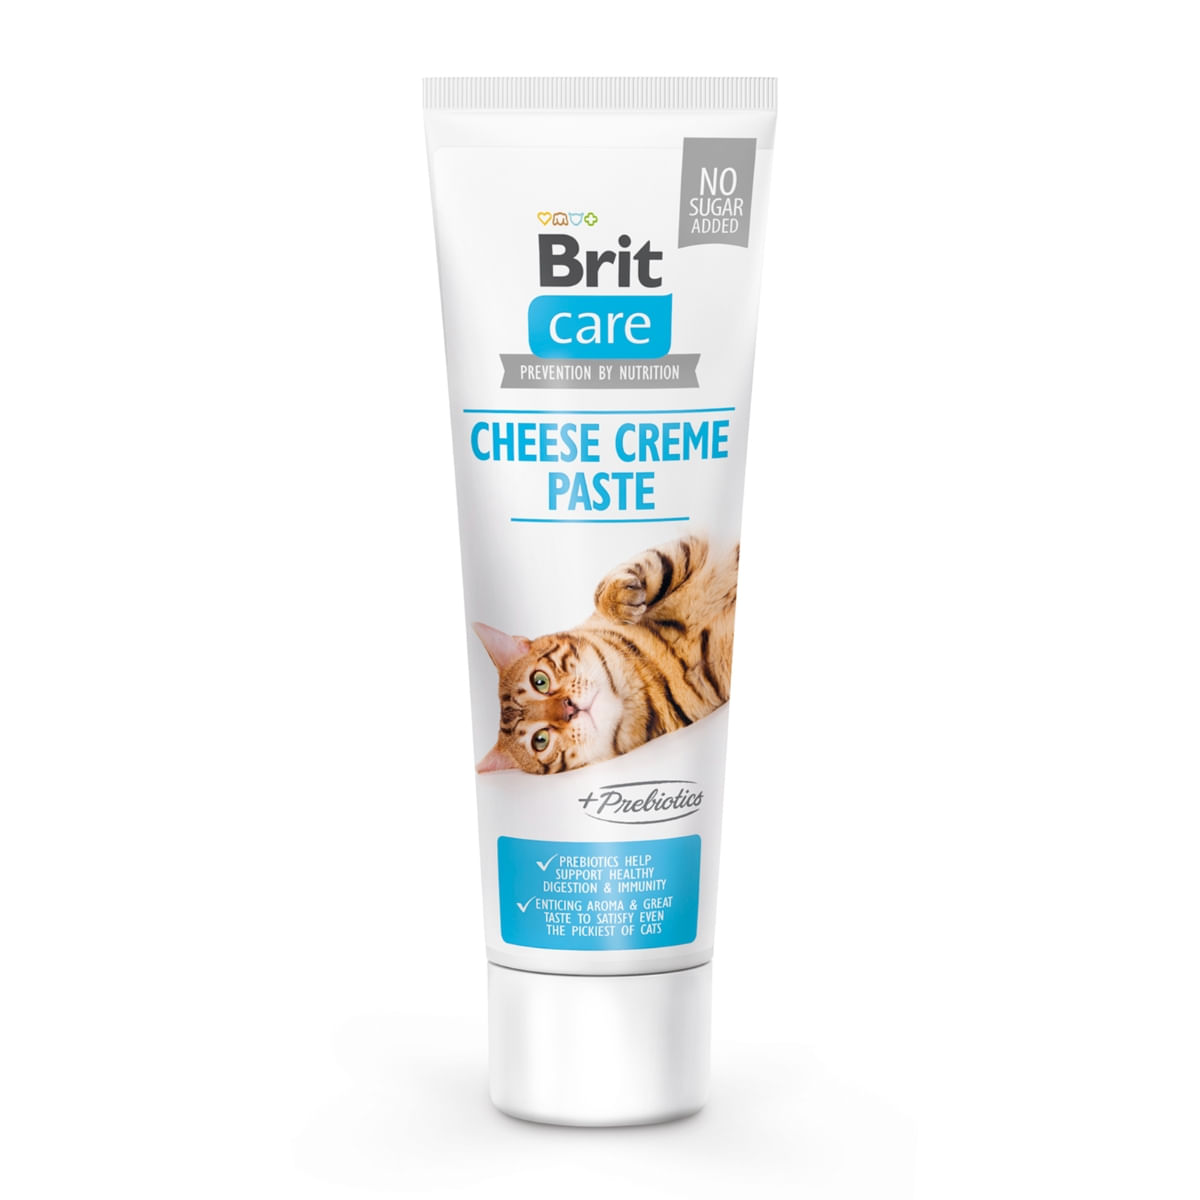 BRIT Care Paste Cheese Creme with Prebiotics, recompense funcționale pisici, sistem digestiv, pastă, 100g 100g